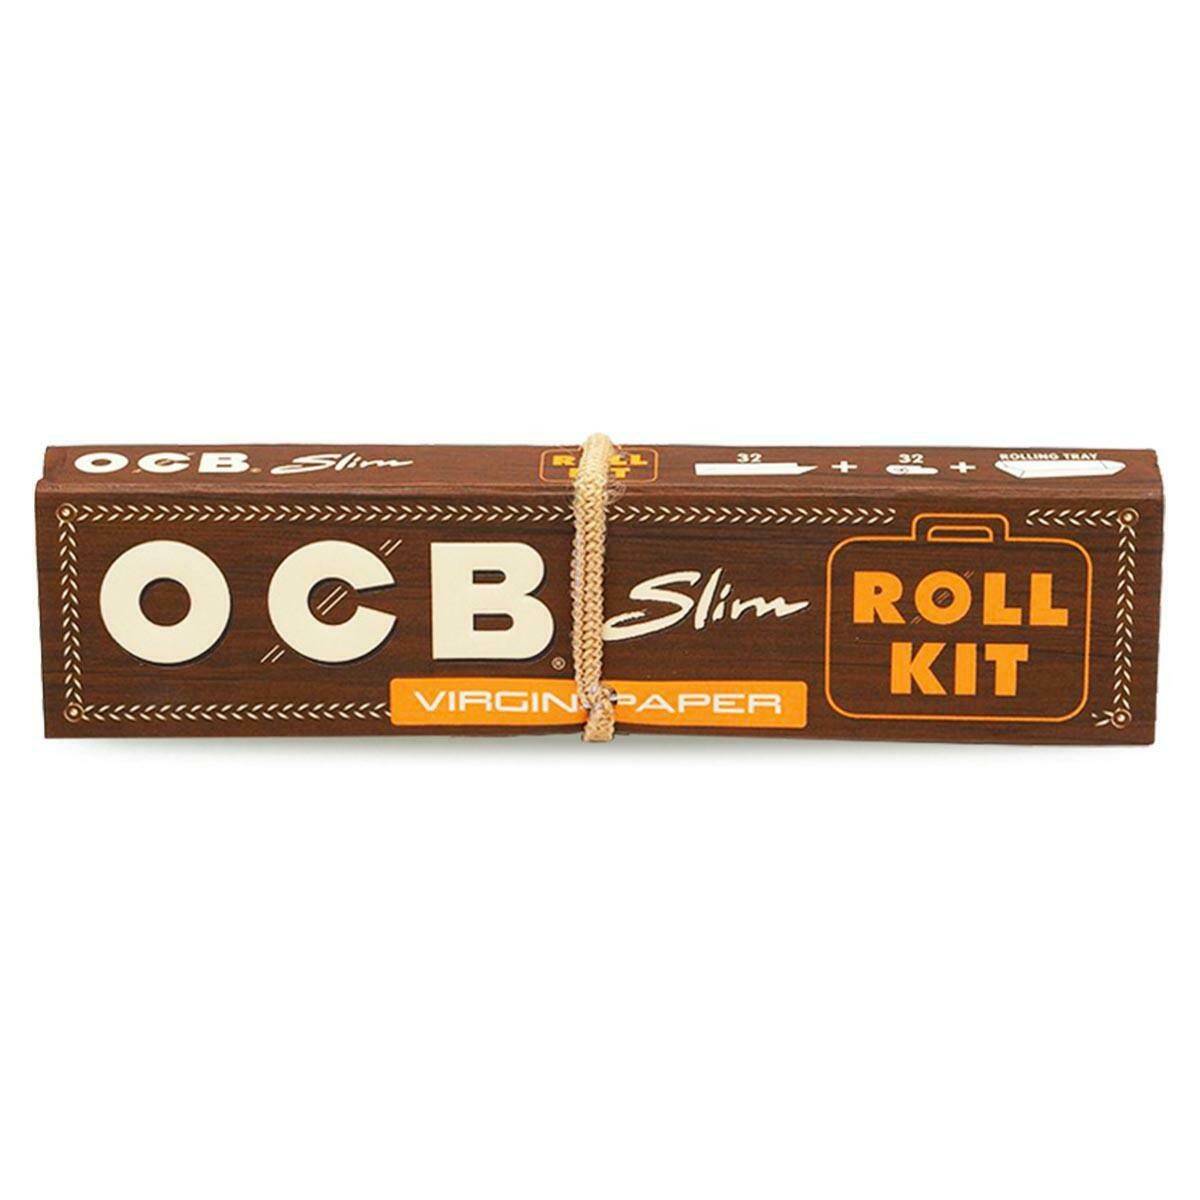 Rolling Papers OCB Virgin Slim + Filters (Roll Kit)